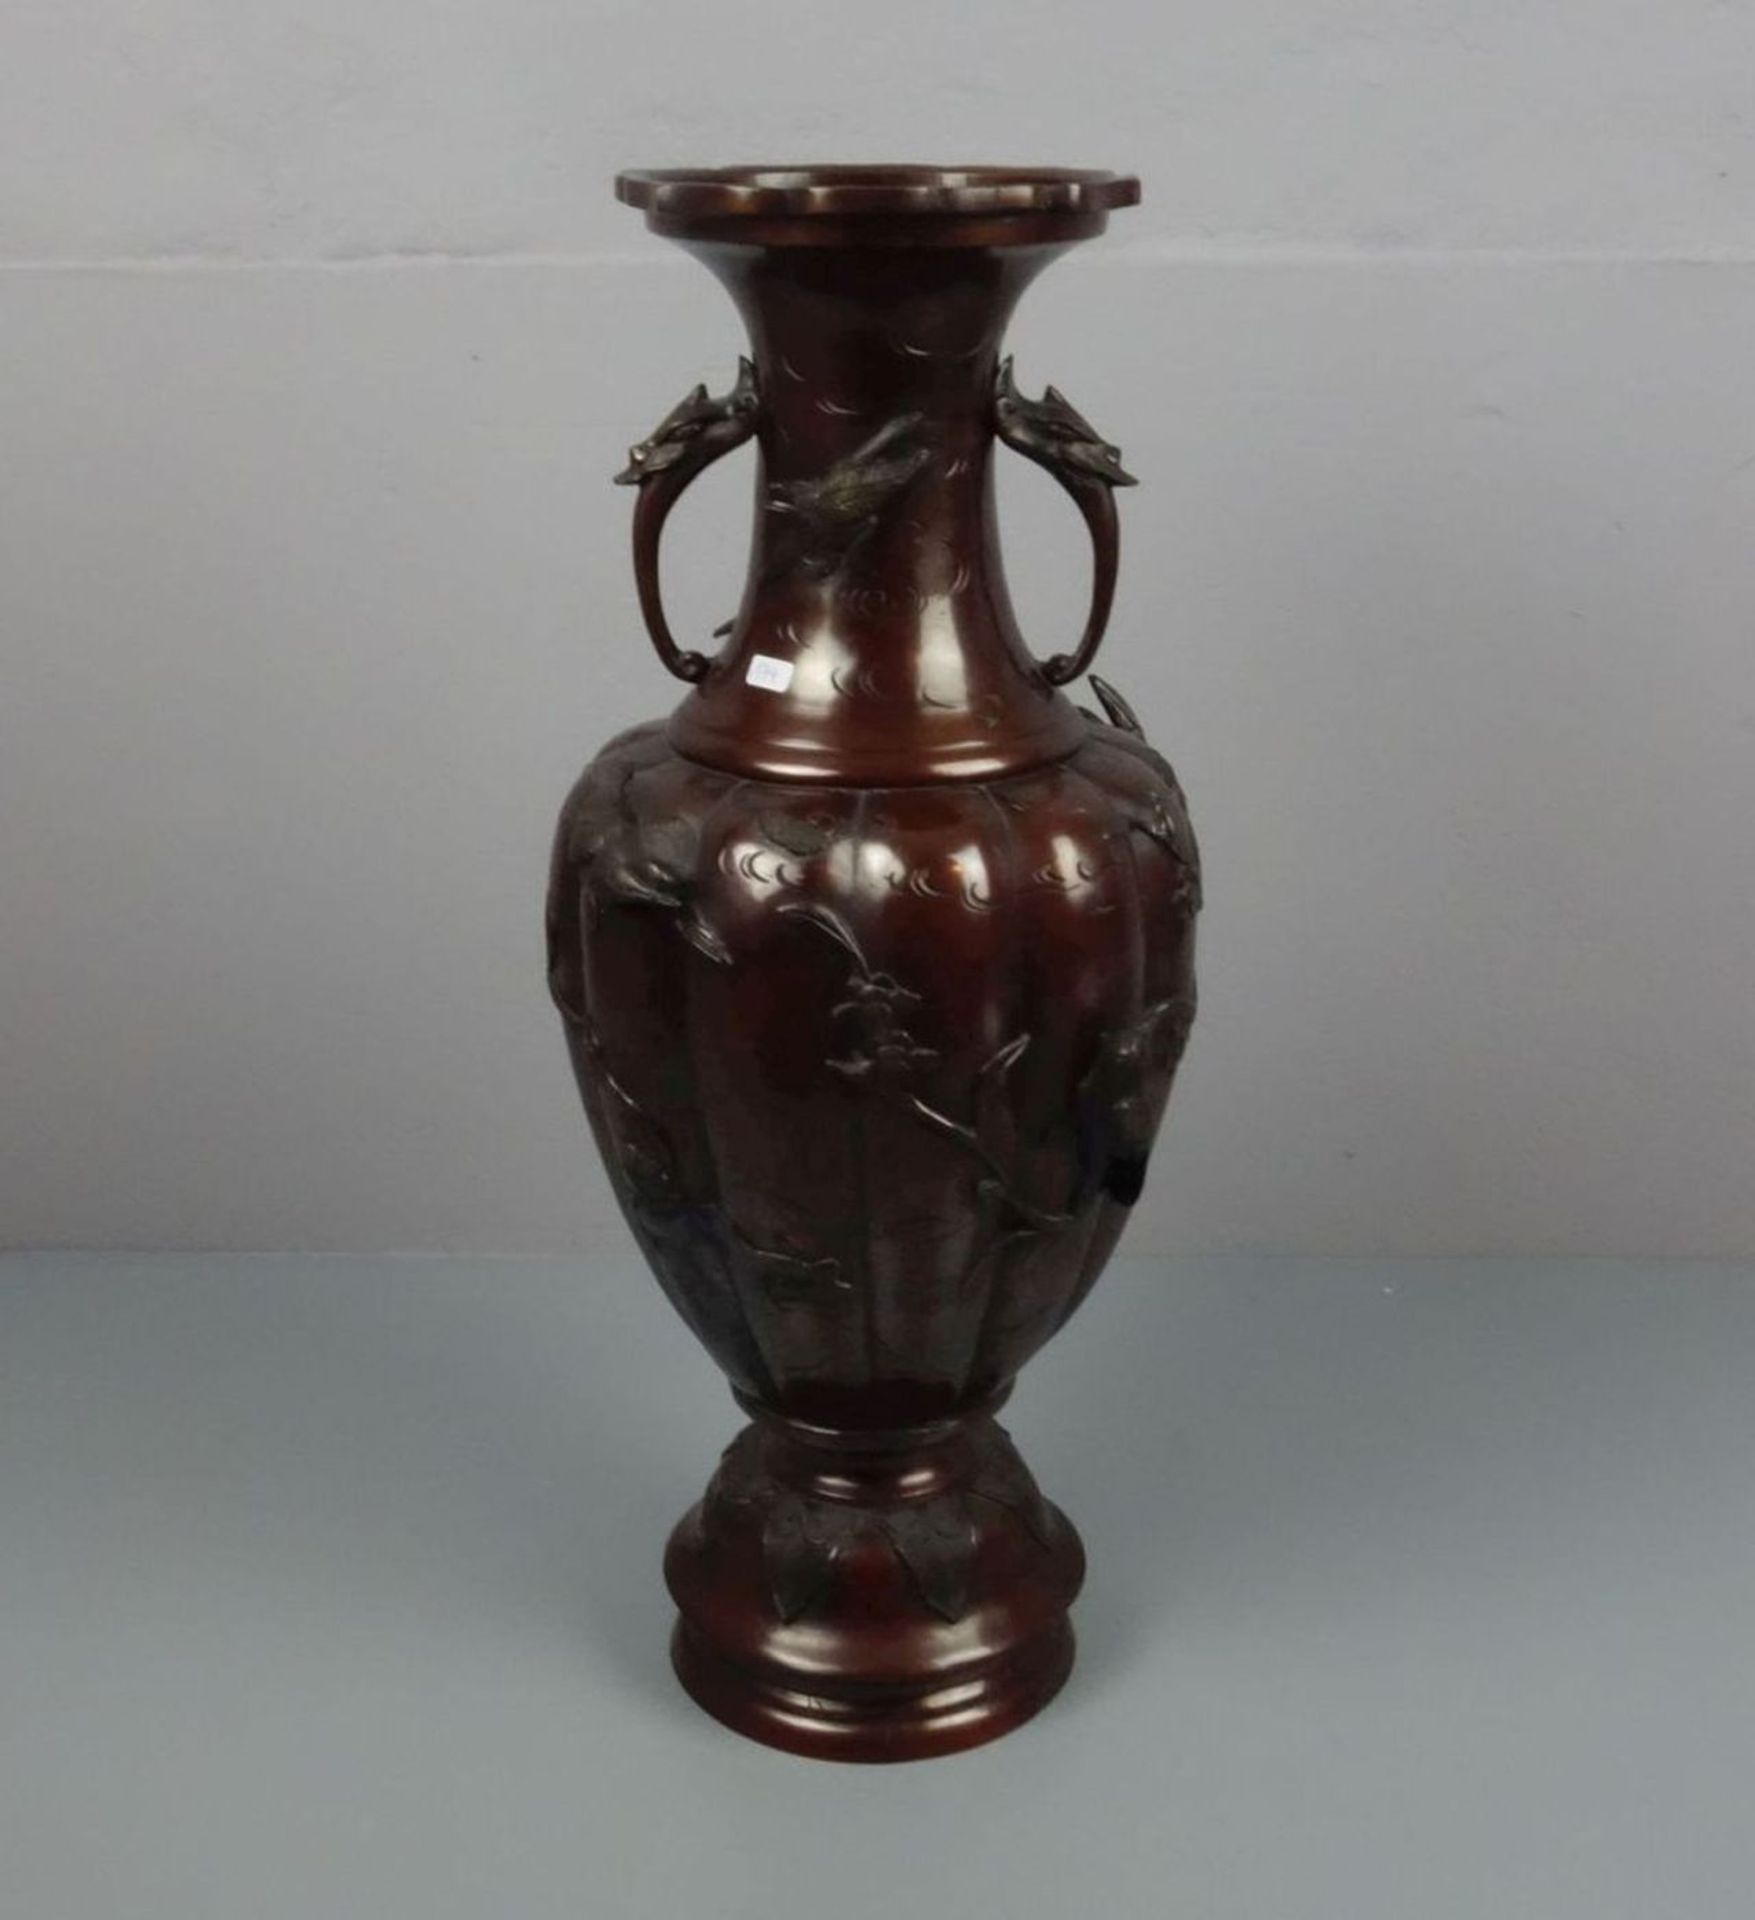 BODENVASE AUS METALL / chinese metal vase, China, 20. Jh., brüniertes Metall, unter dem Stand mit